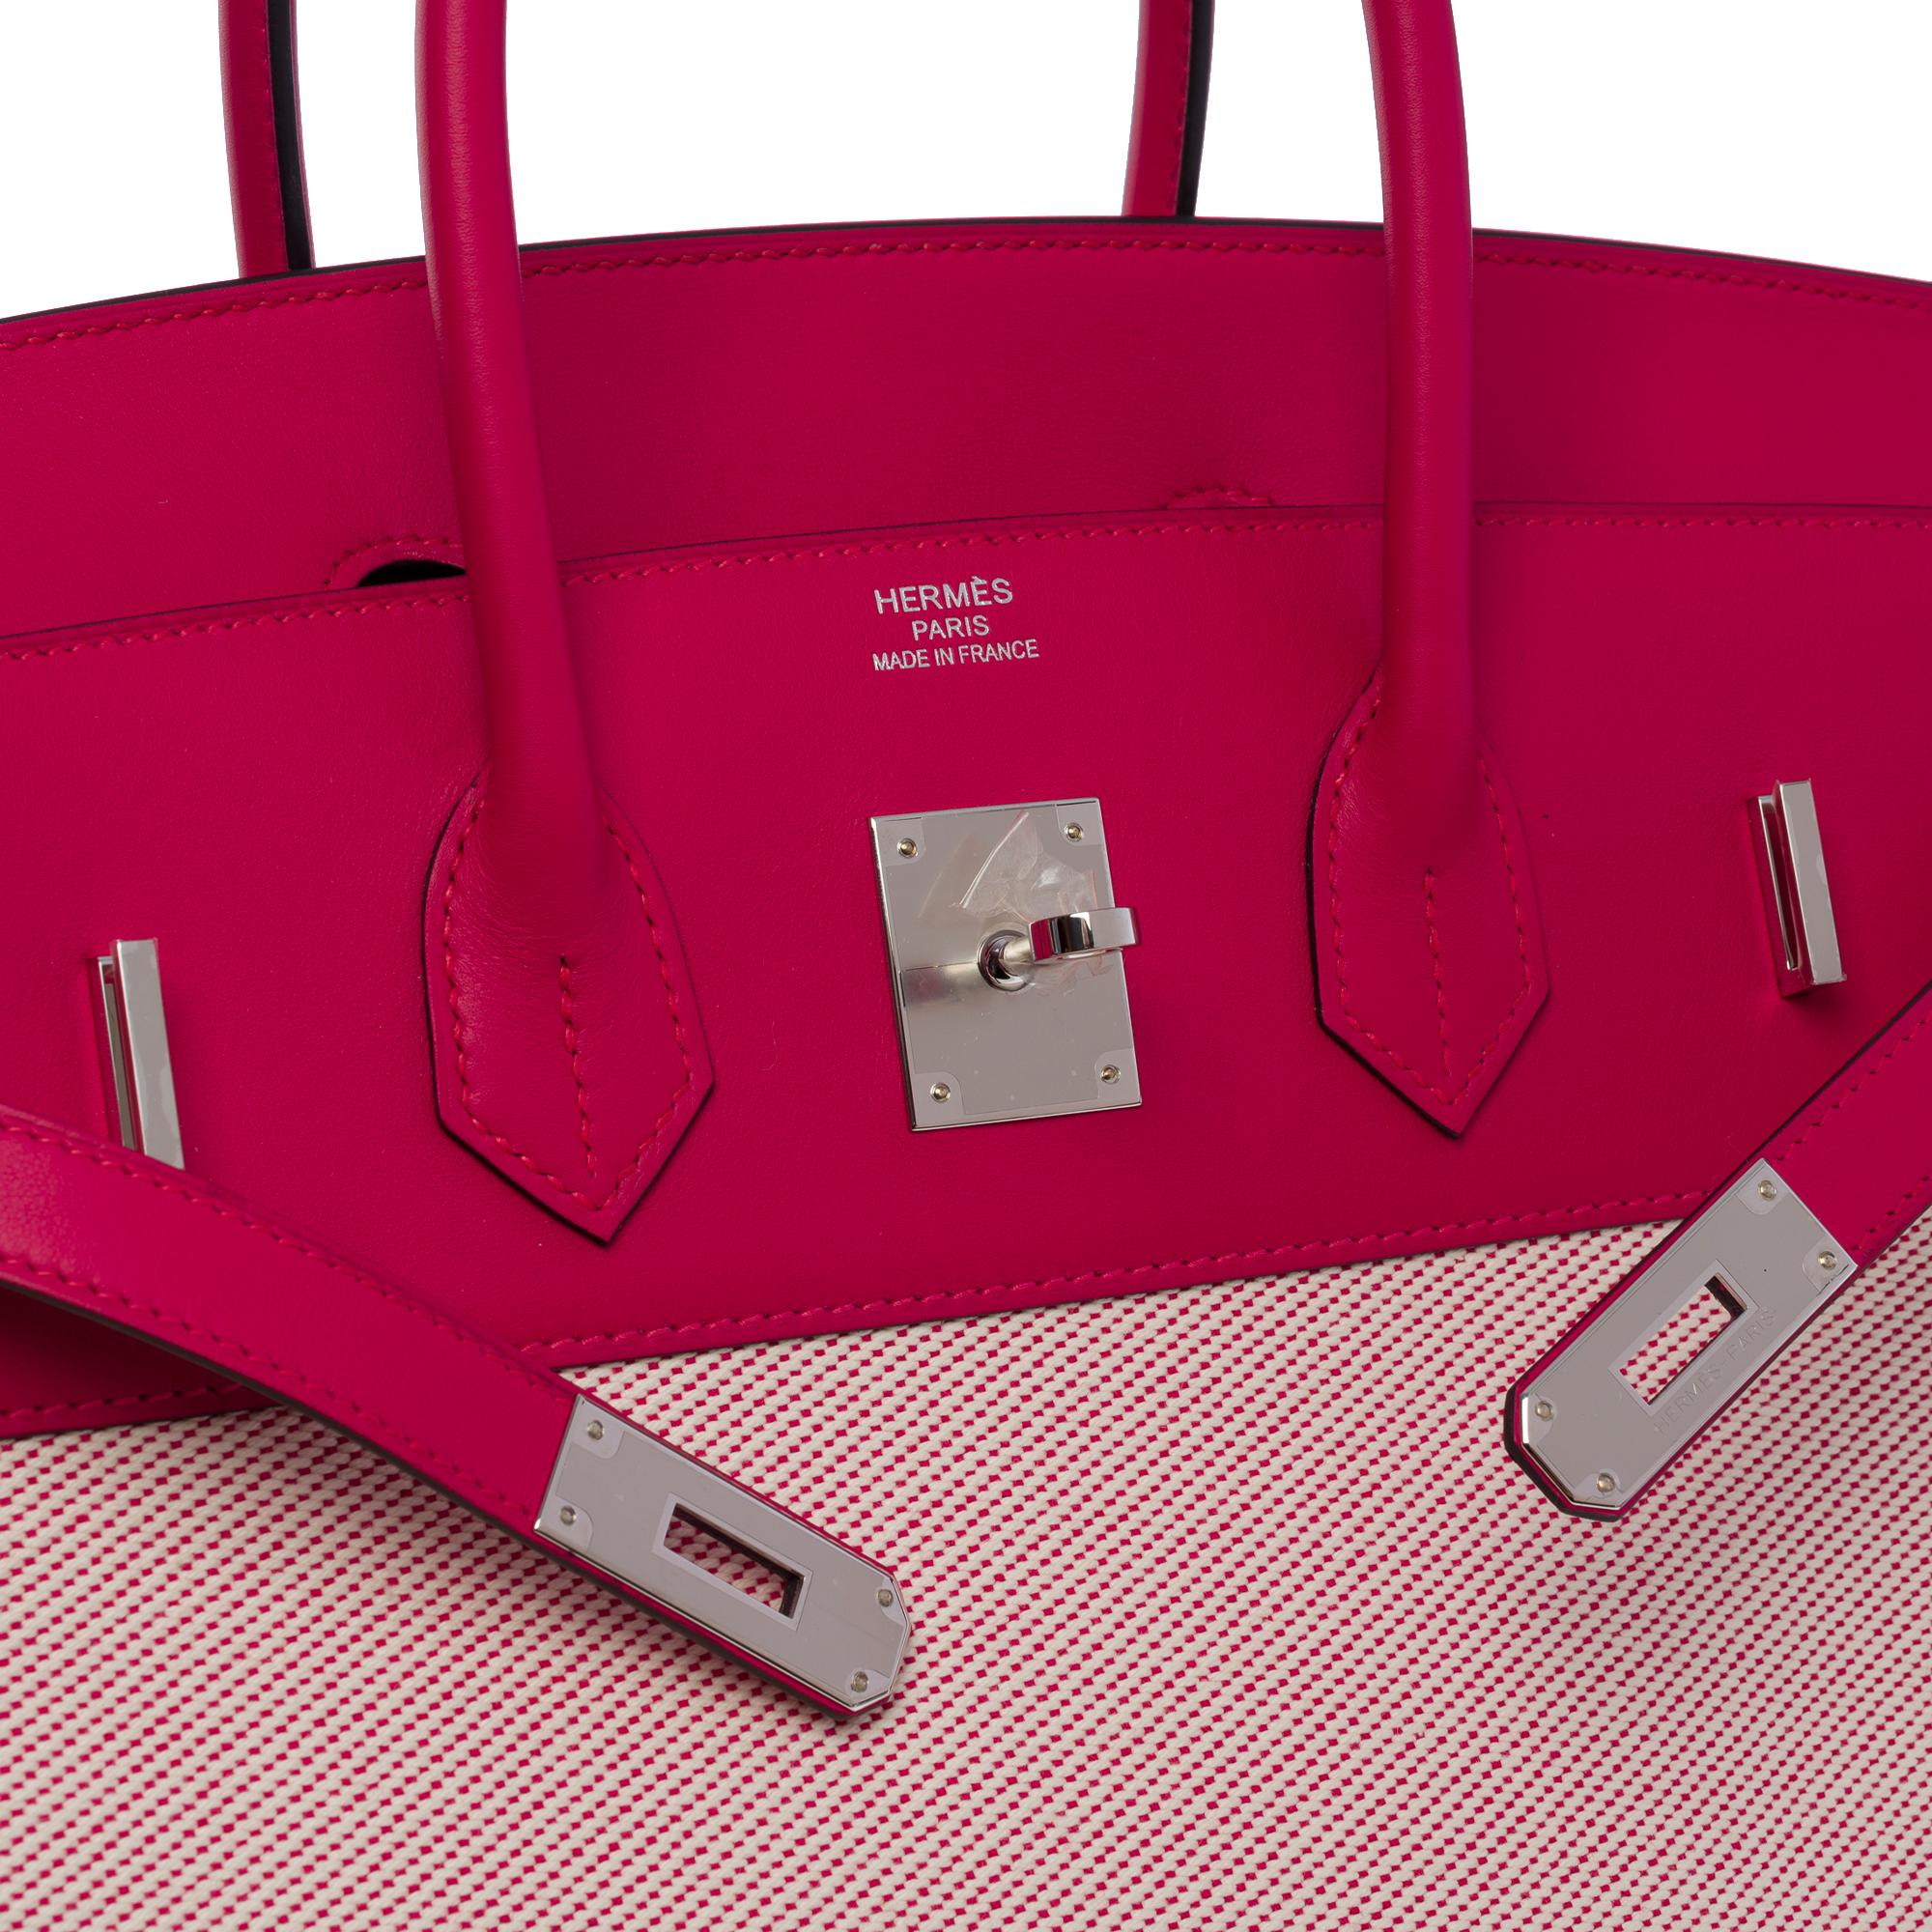 New Fray Fray Hermès Birkin 35 handbag in beige canvas/Pink swift leather, SHW For Sale 1